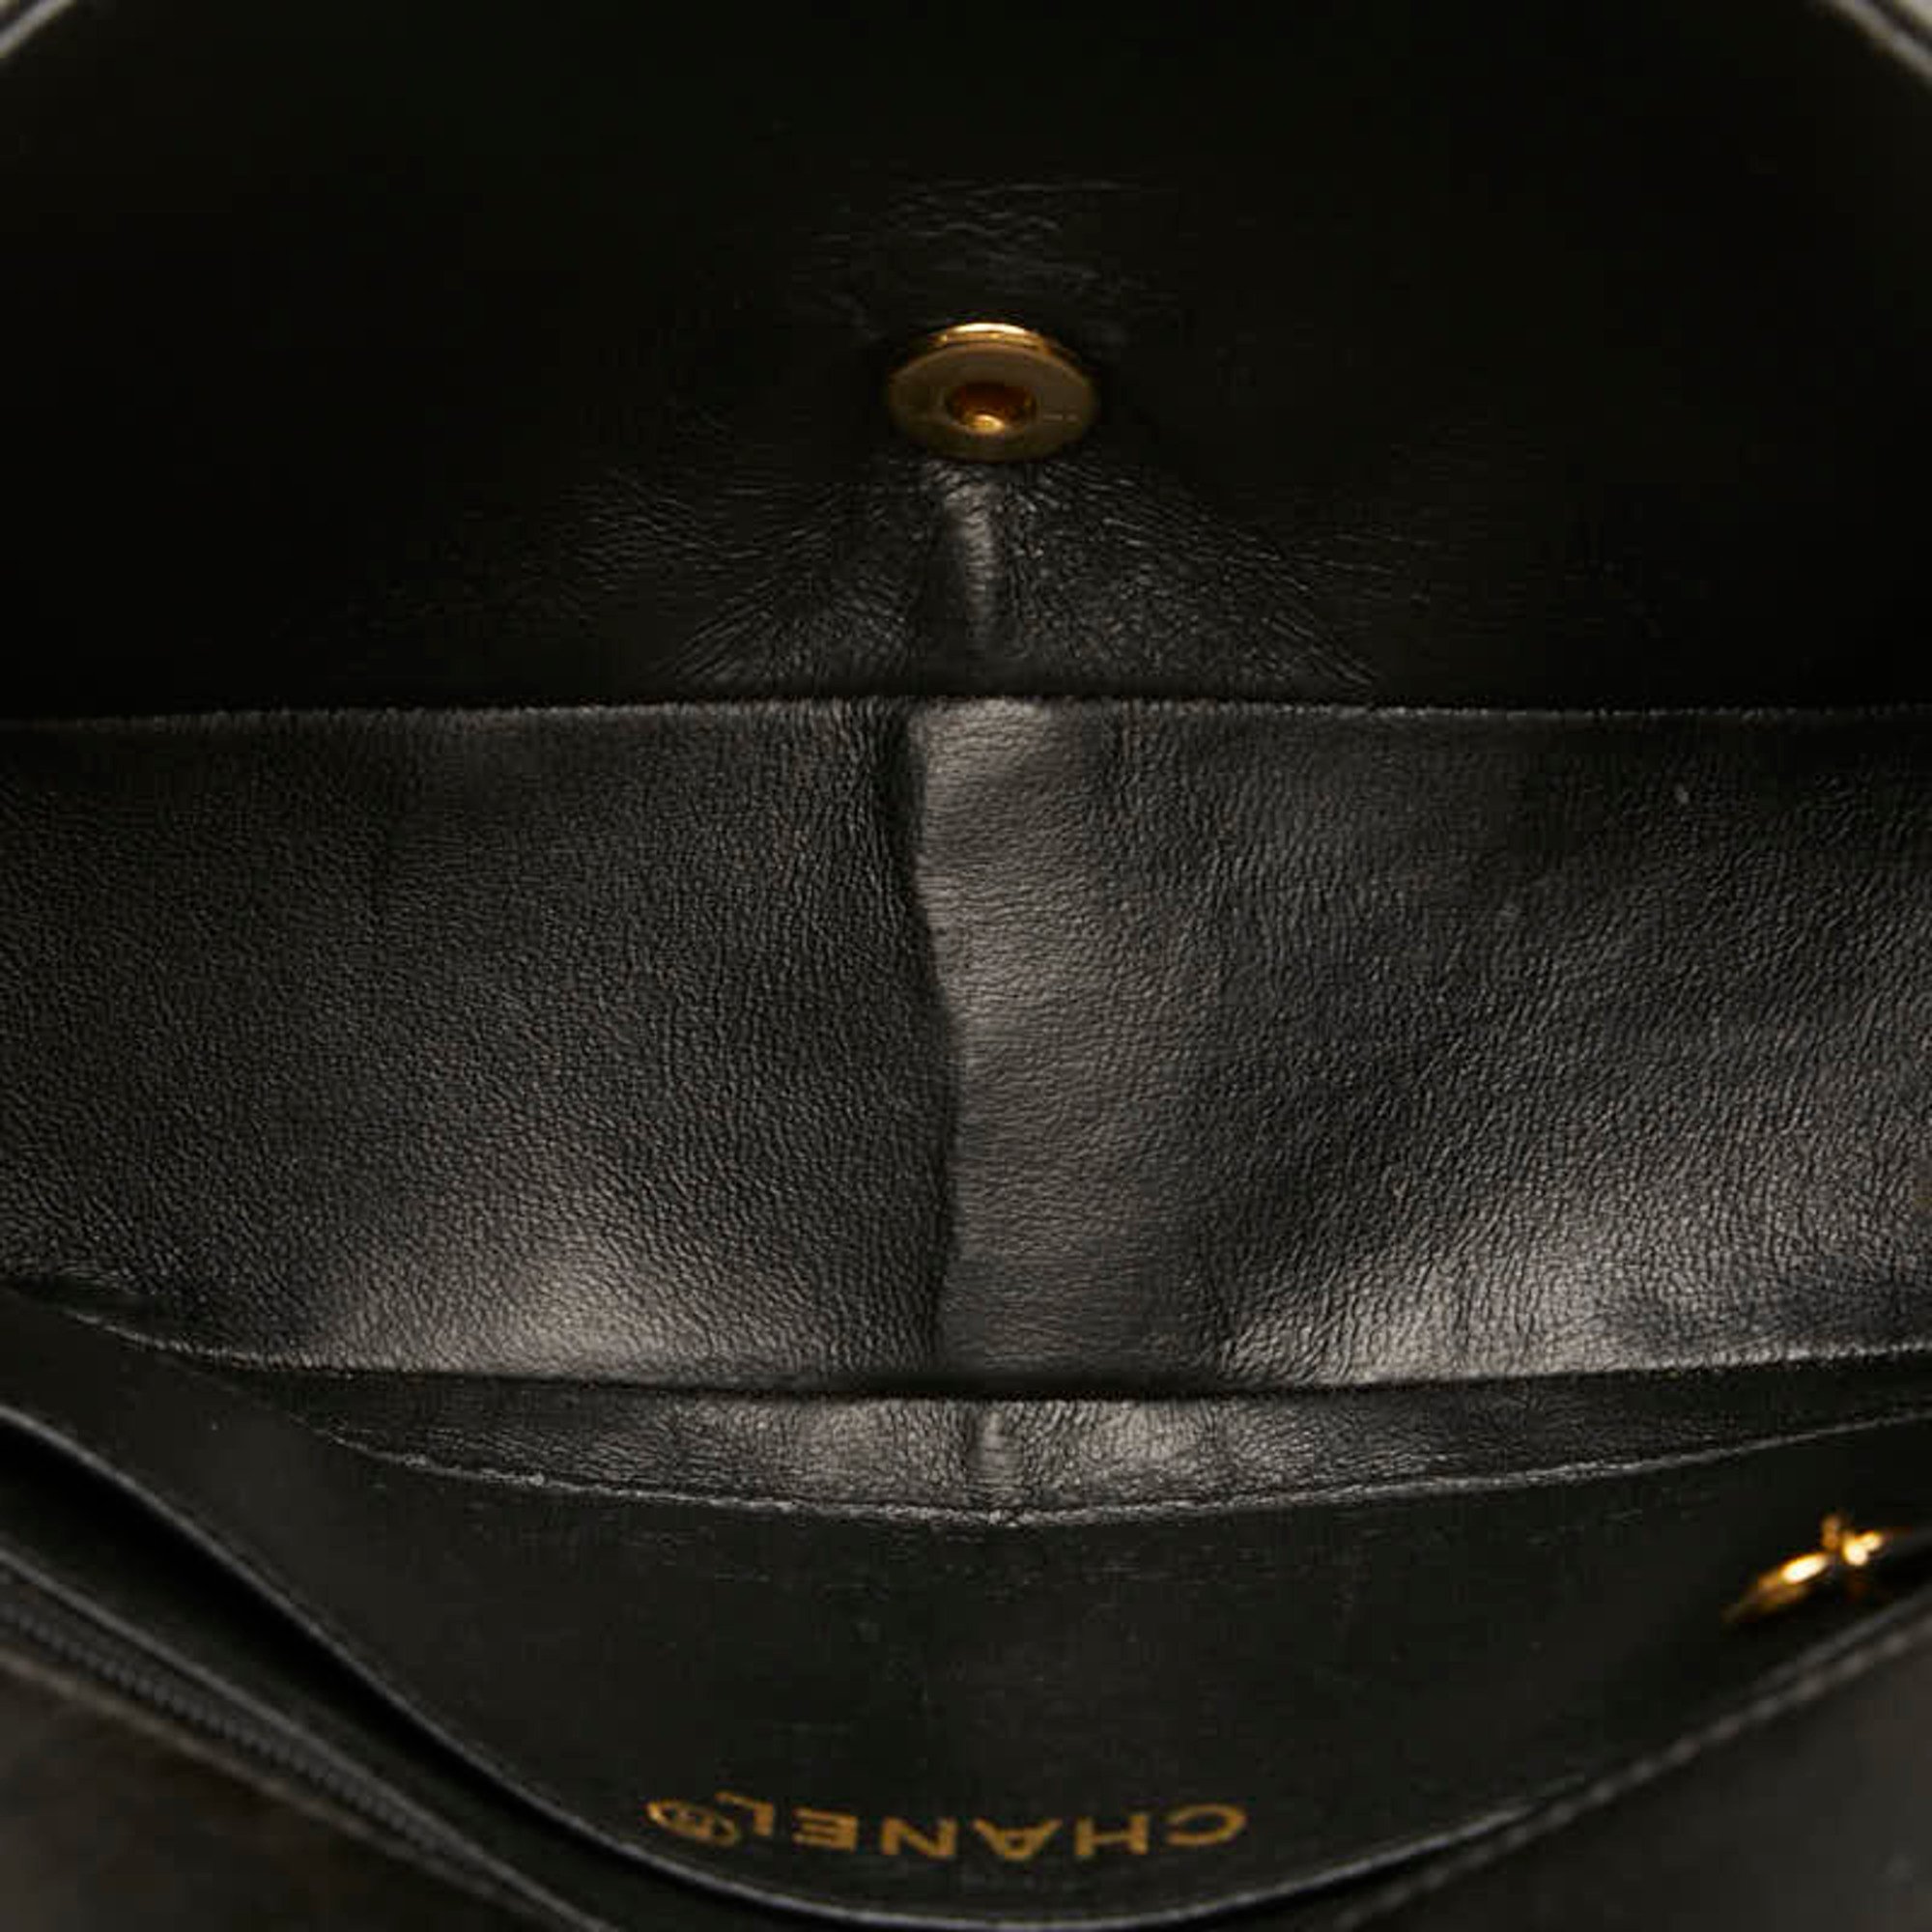 Chanel Matelasse Diana 25 Chain Shoulder Bag Black Lambskin Women's CHANEL